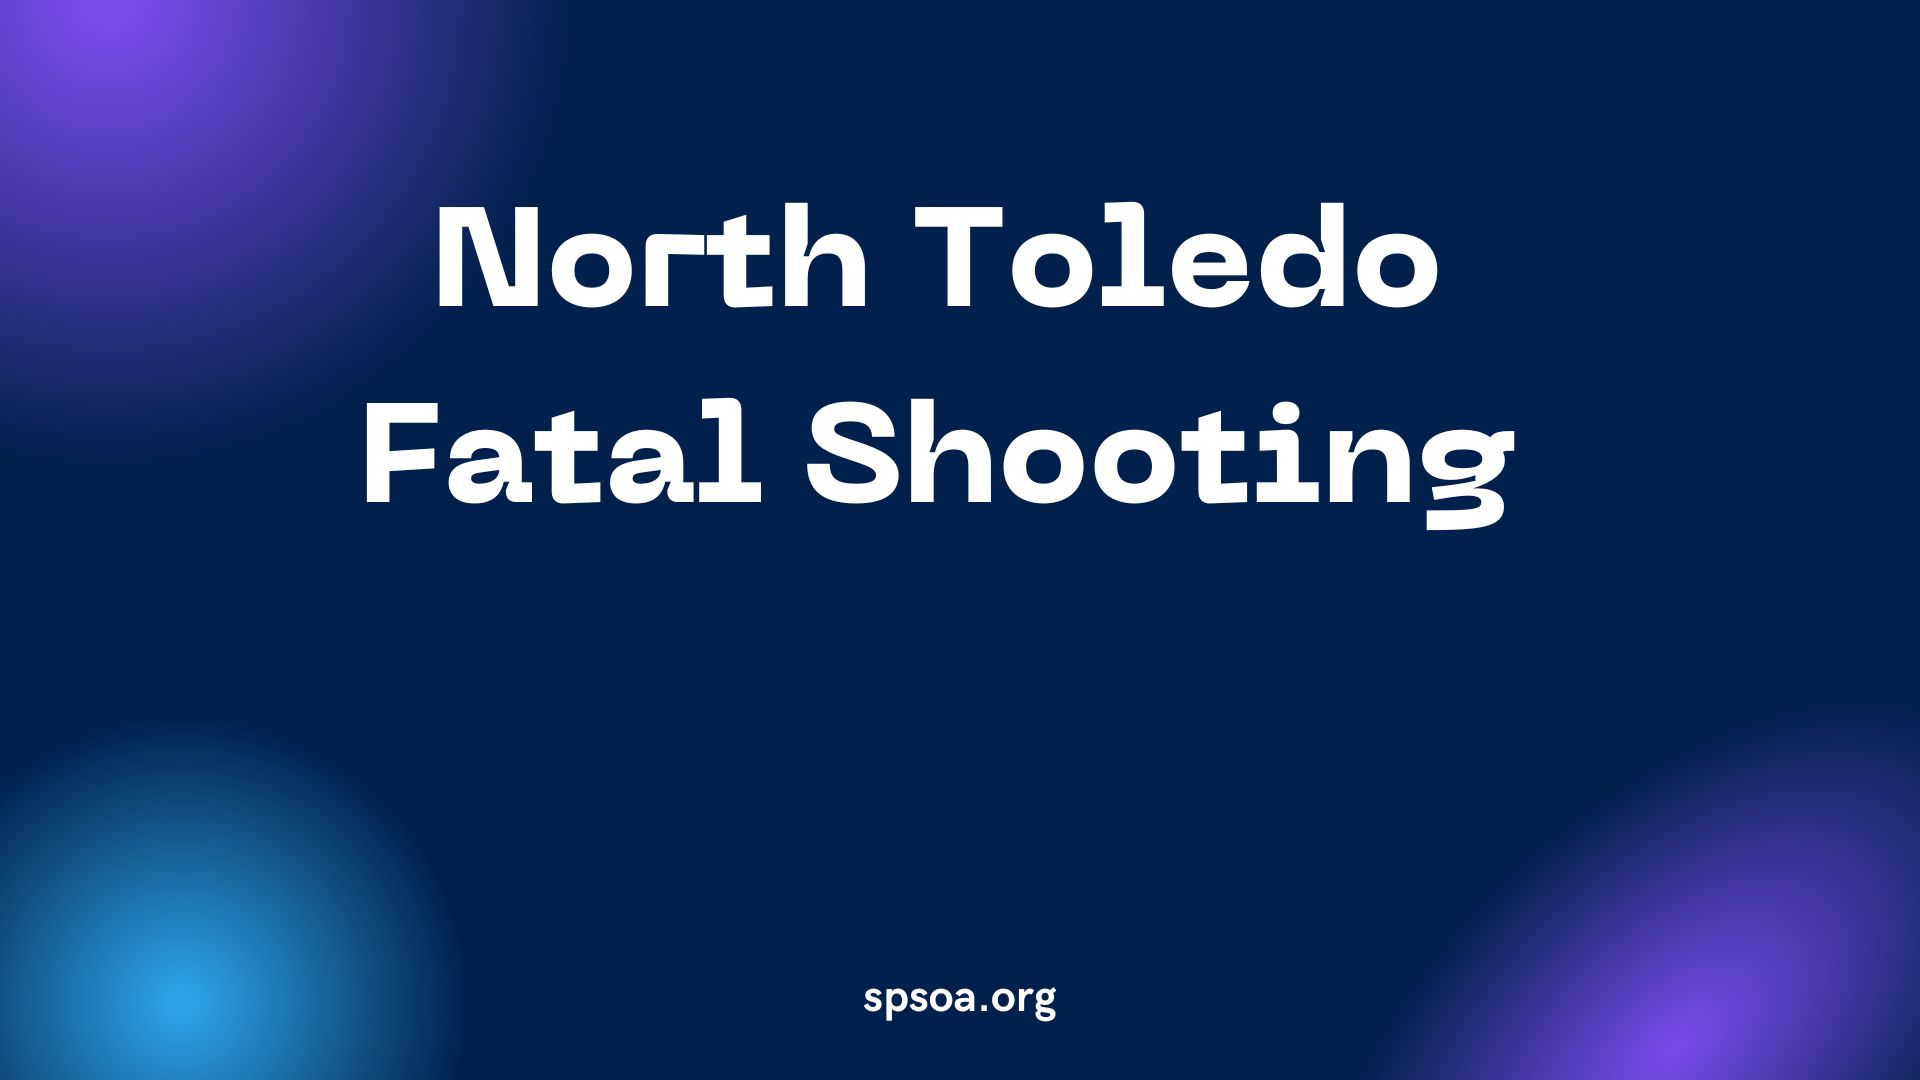 North Toledo Fatal Shooting